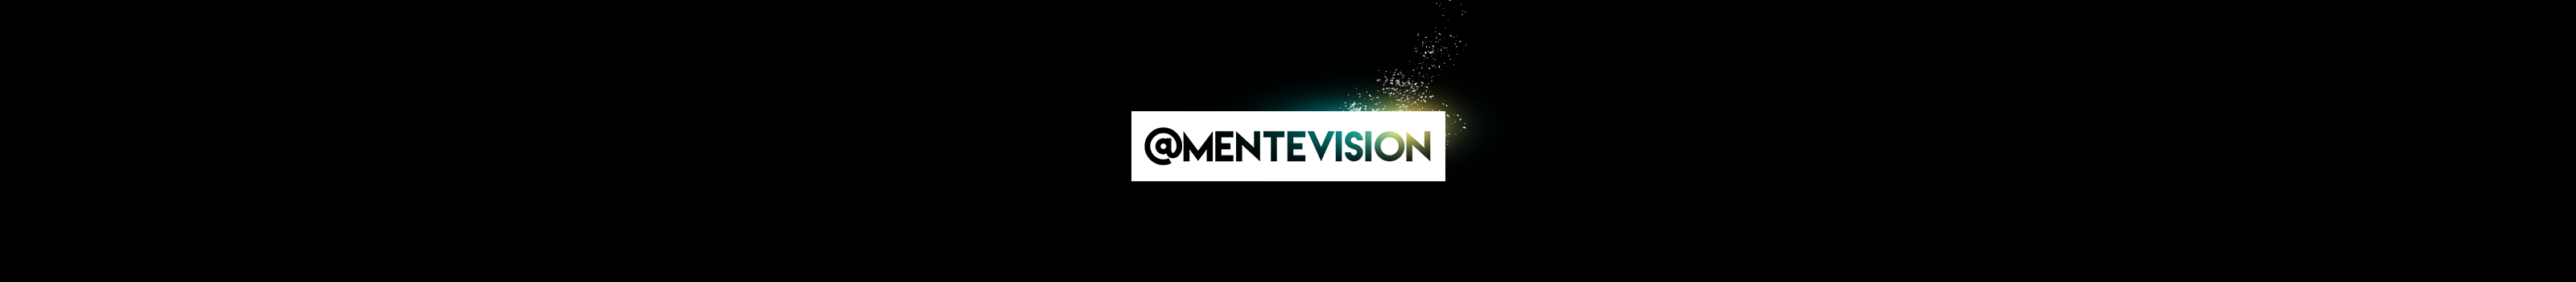 Mentevision .'s profile banner